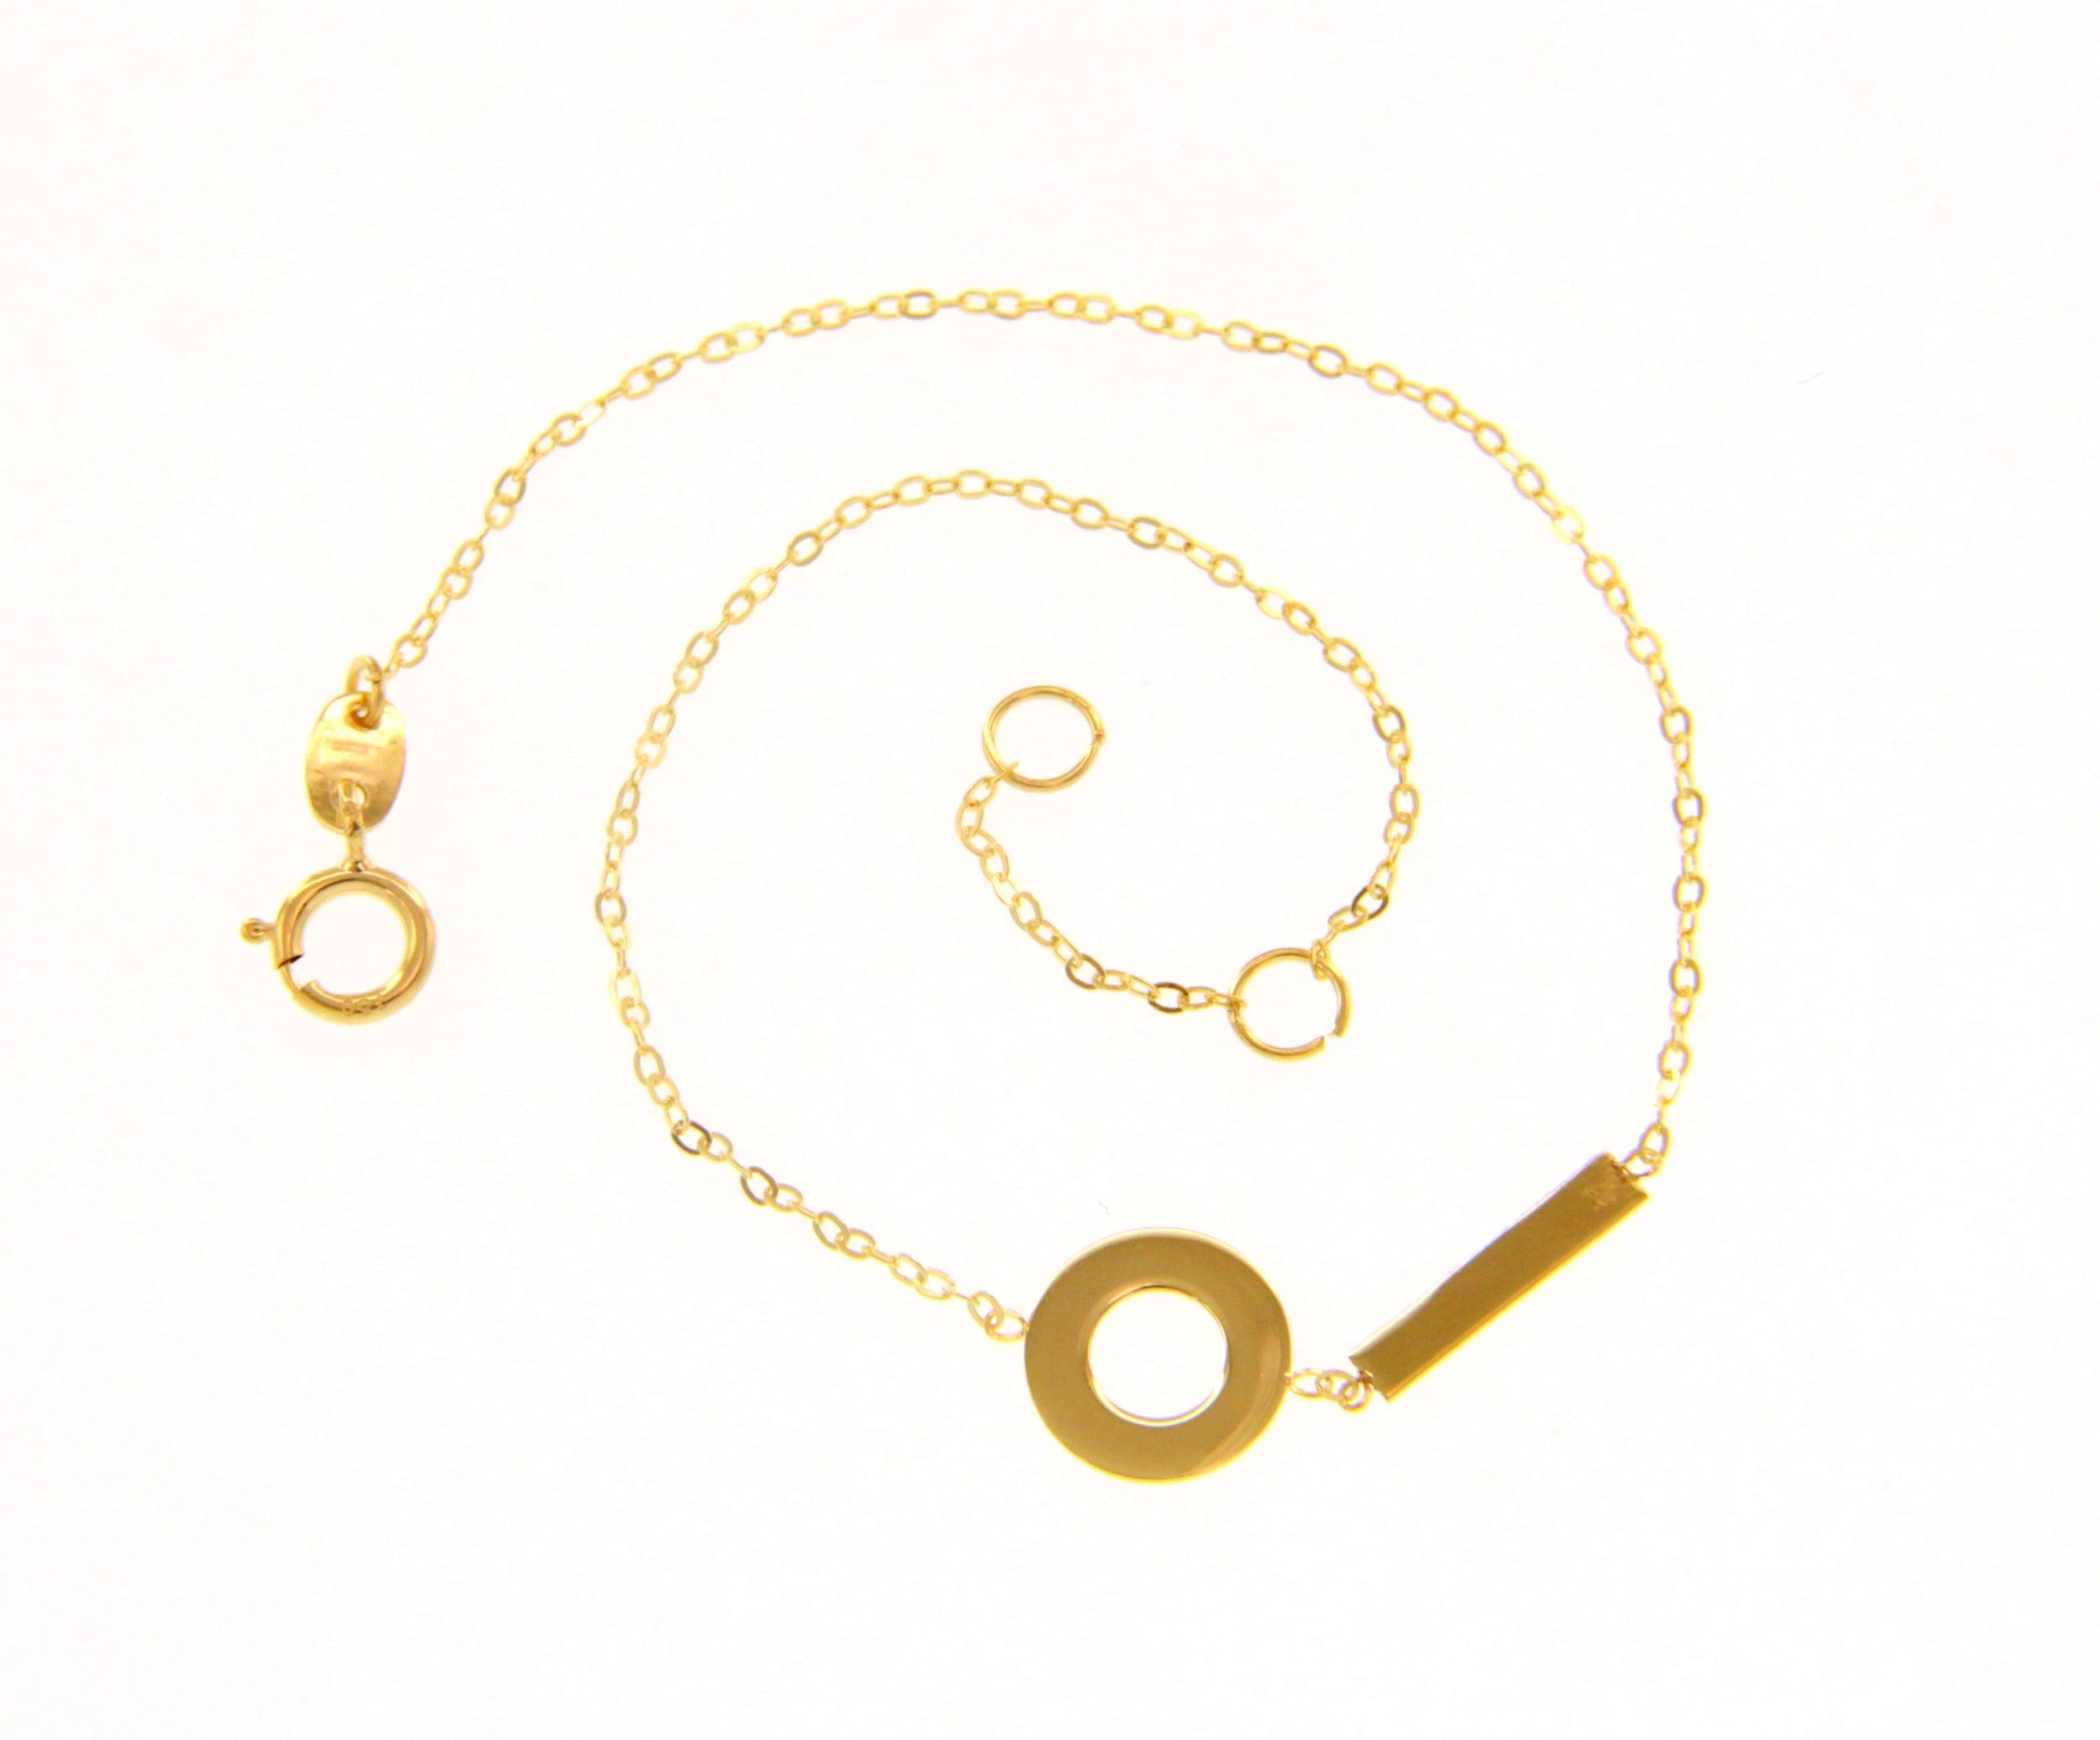 pulsera mujer charms oro - brazalete oro mujer para comprar en joyeria online - mejores joyerias online españa